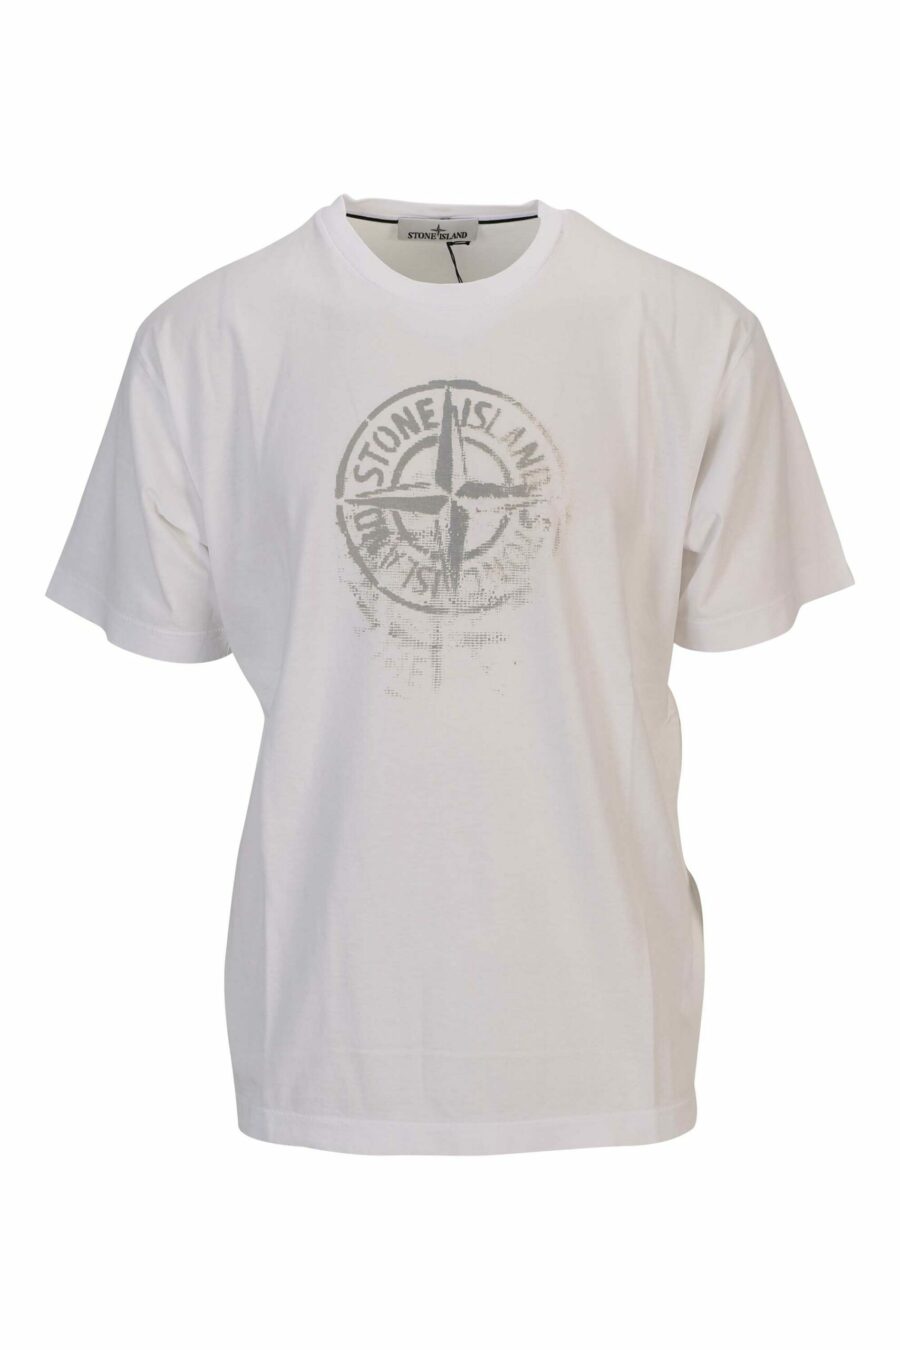 Camiseta blanca con maxilogo brújula - 8052572905230 scaled